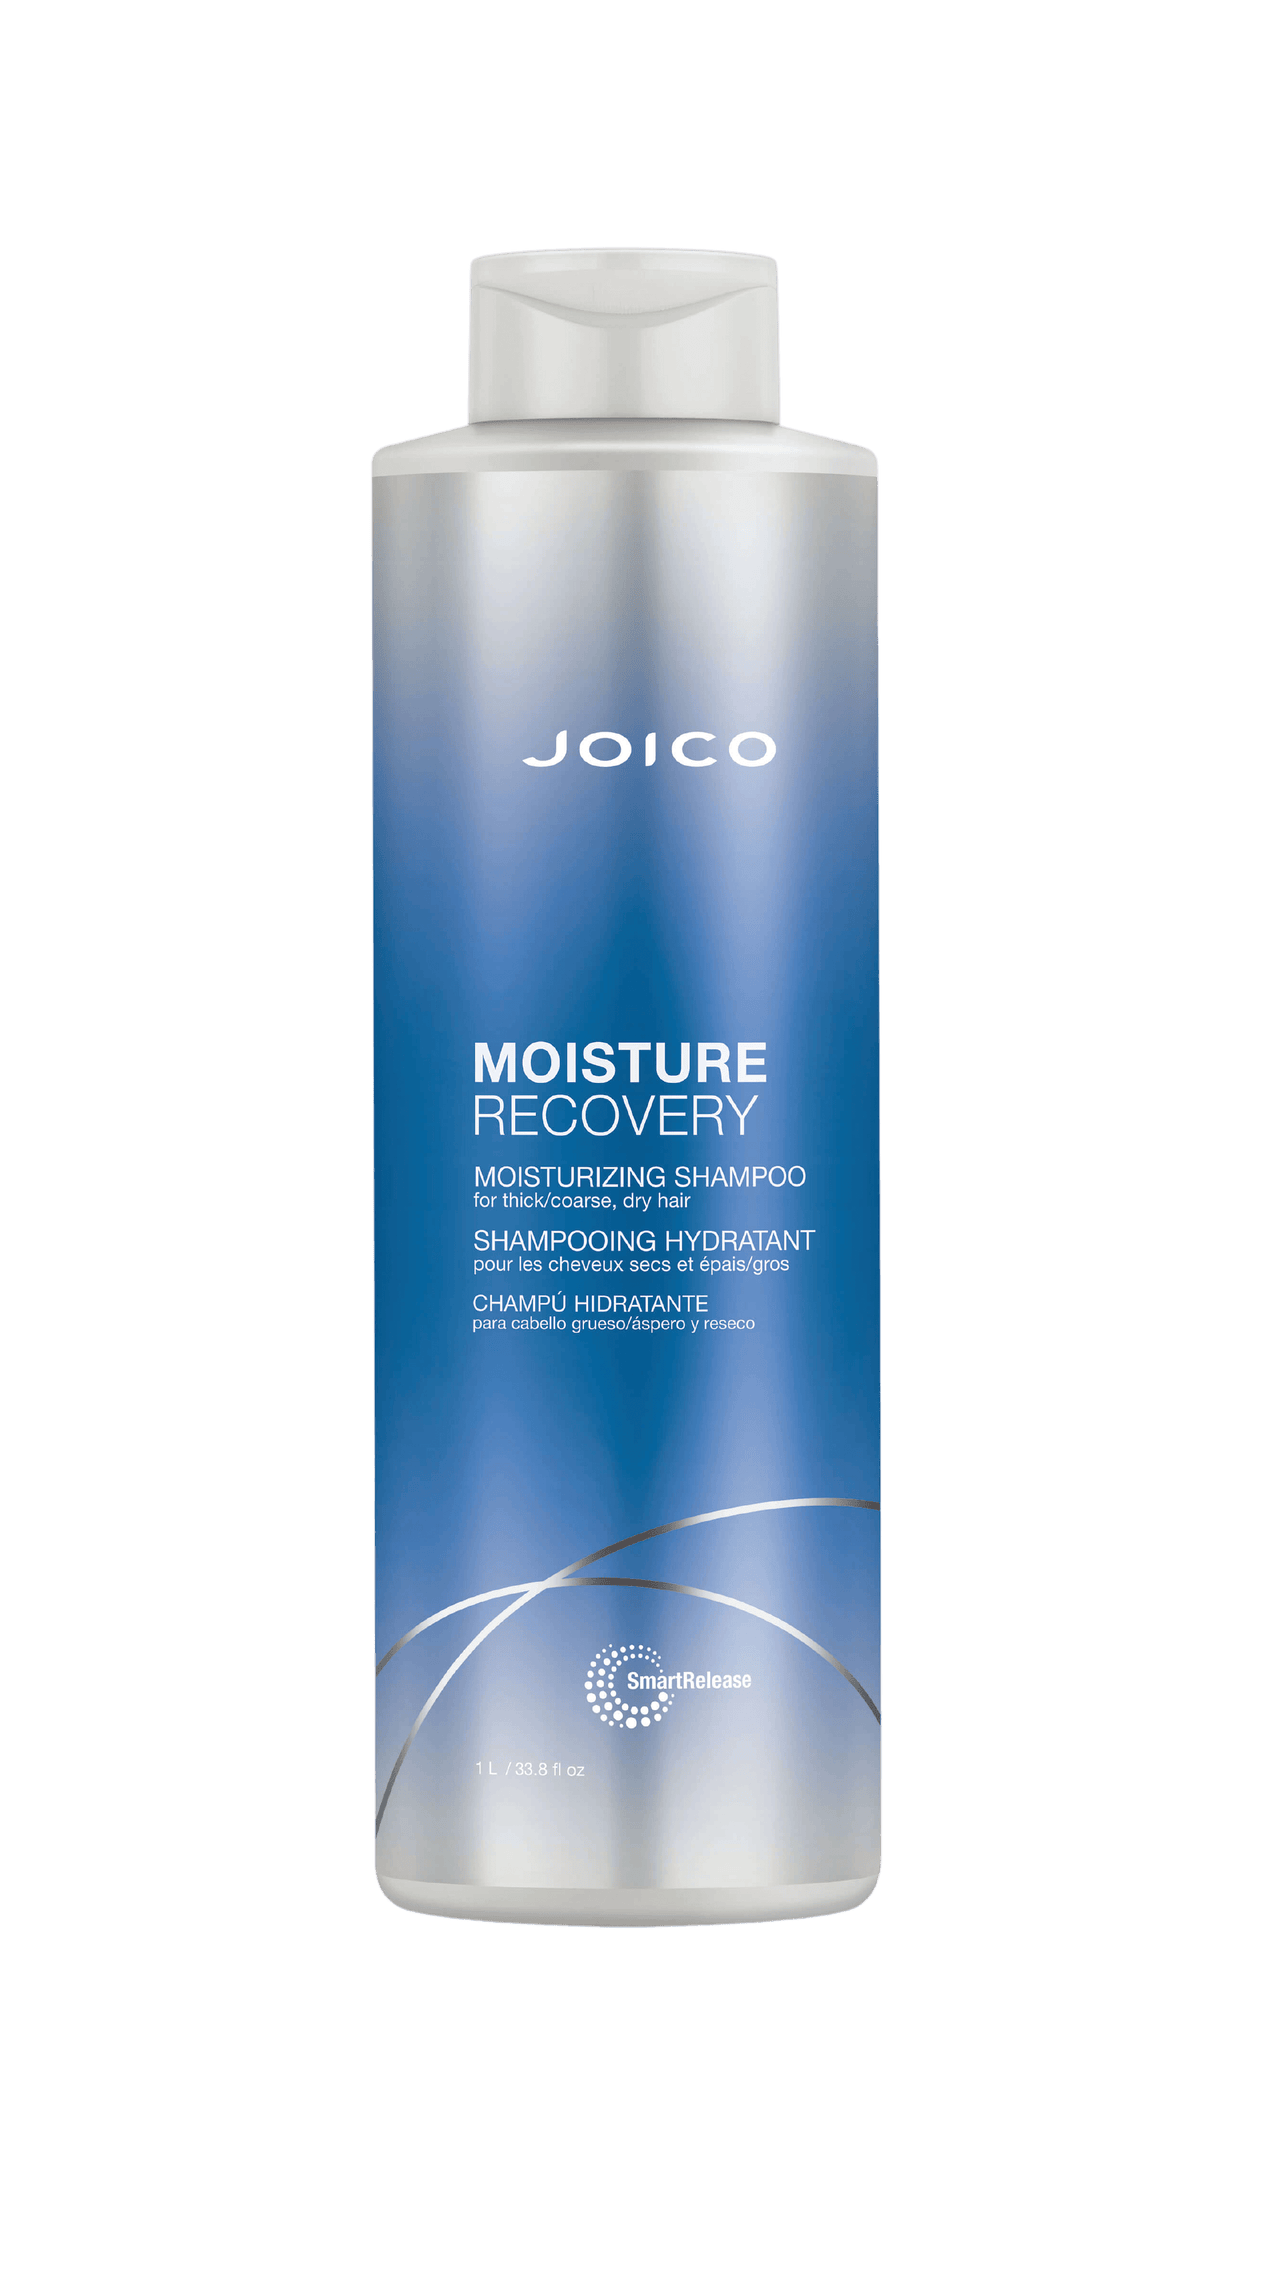 Joico Moisture Recovery Shampoo 33.8oz Bottle